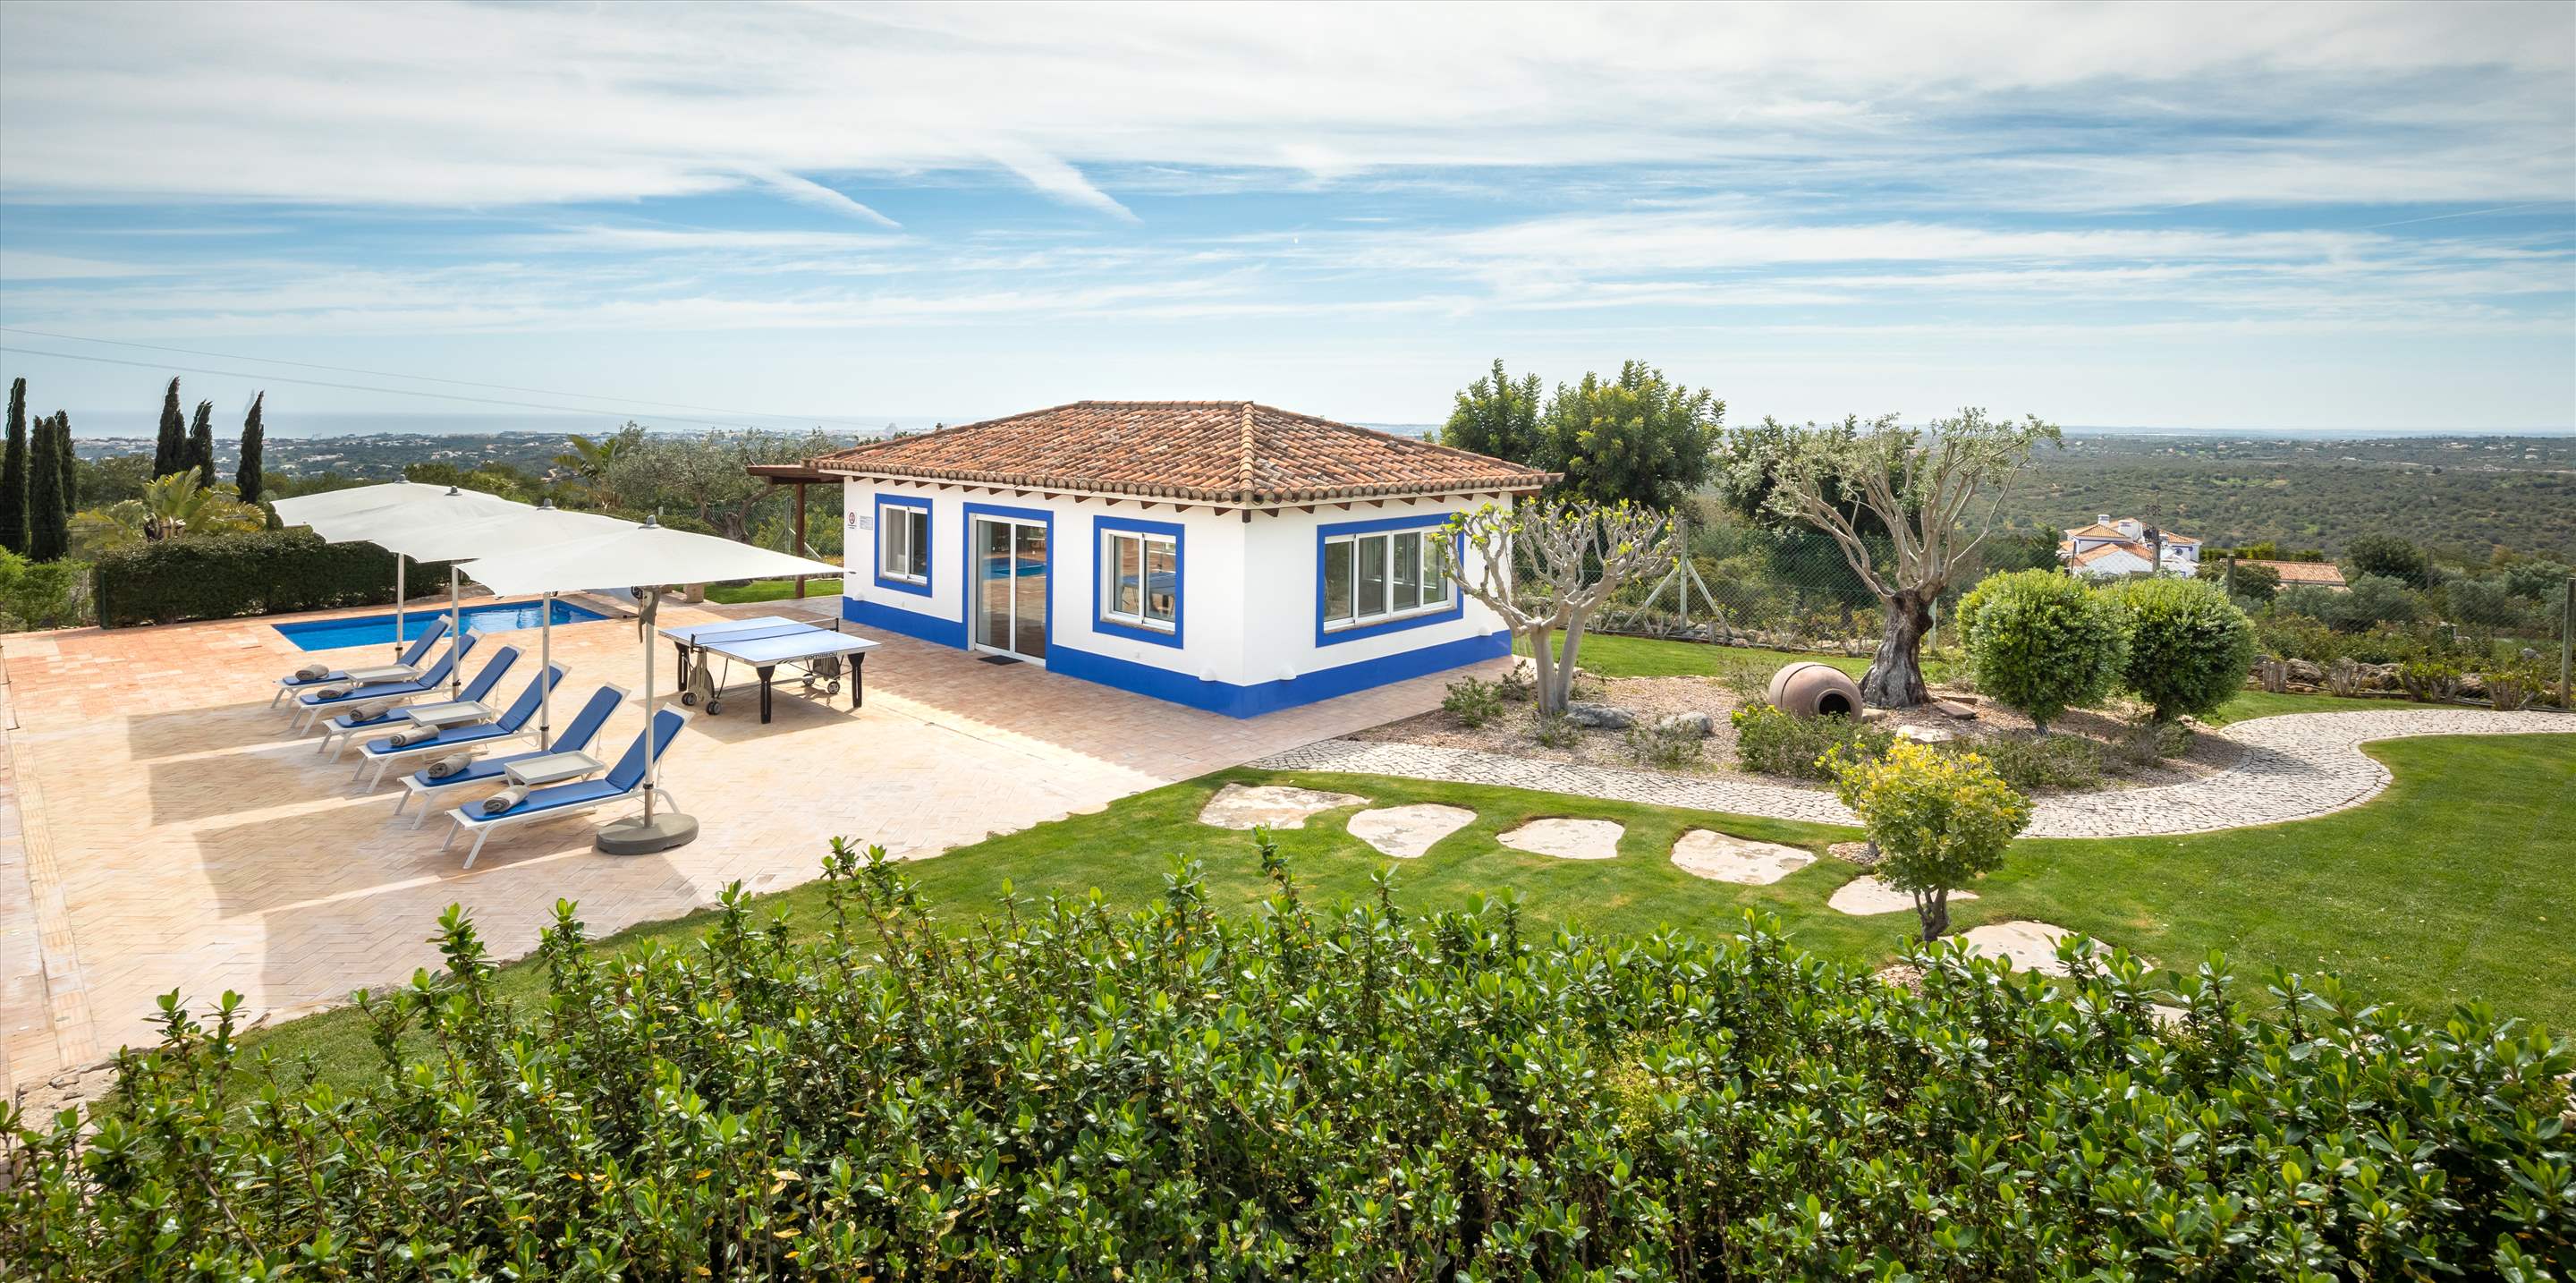 Casa da Montanha, 15-16 persons, 9 bedroom villa in Vilamoura Area, Algarve Photo #3